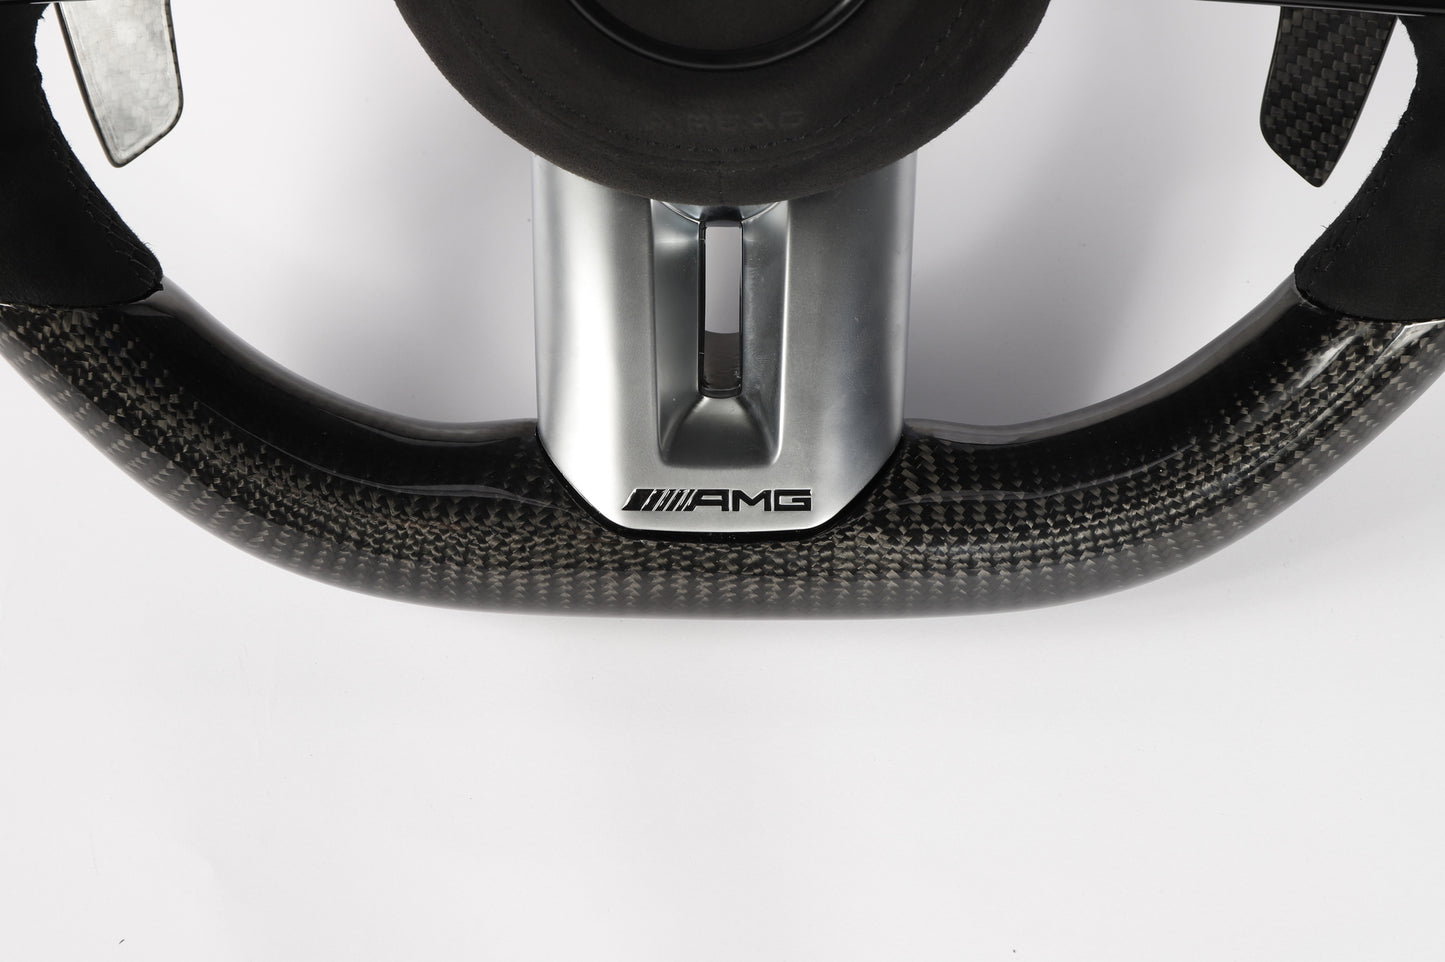 2021 Mercedes AMG Customisable Carbon Fibre Steering Wheel